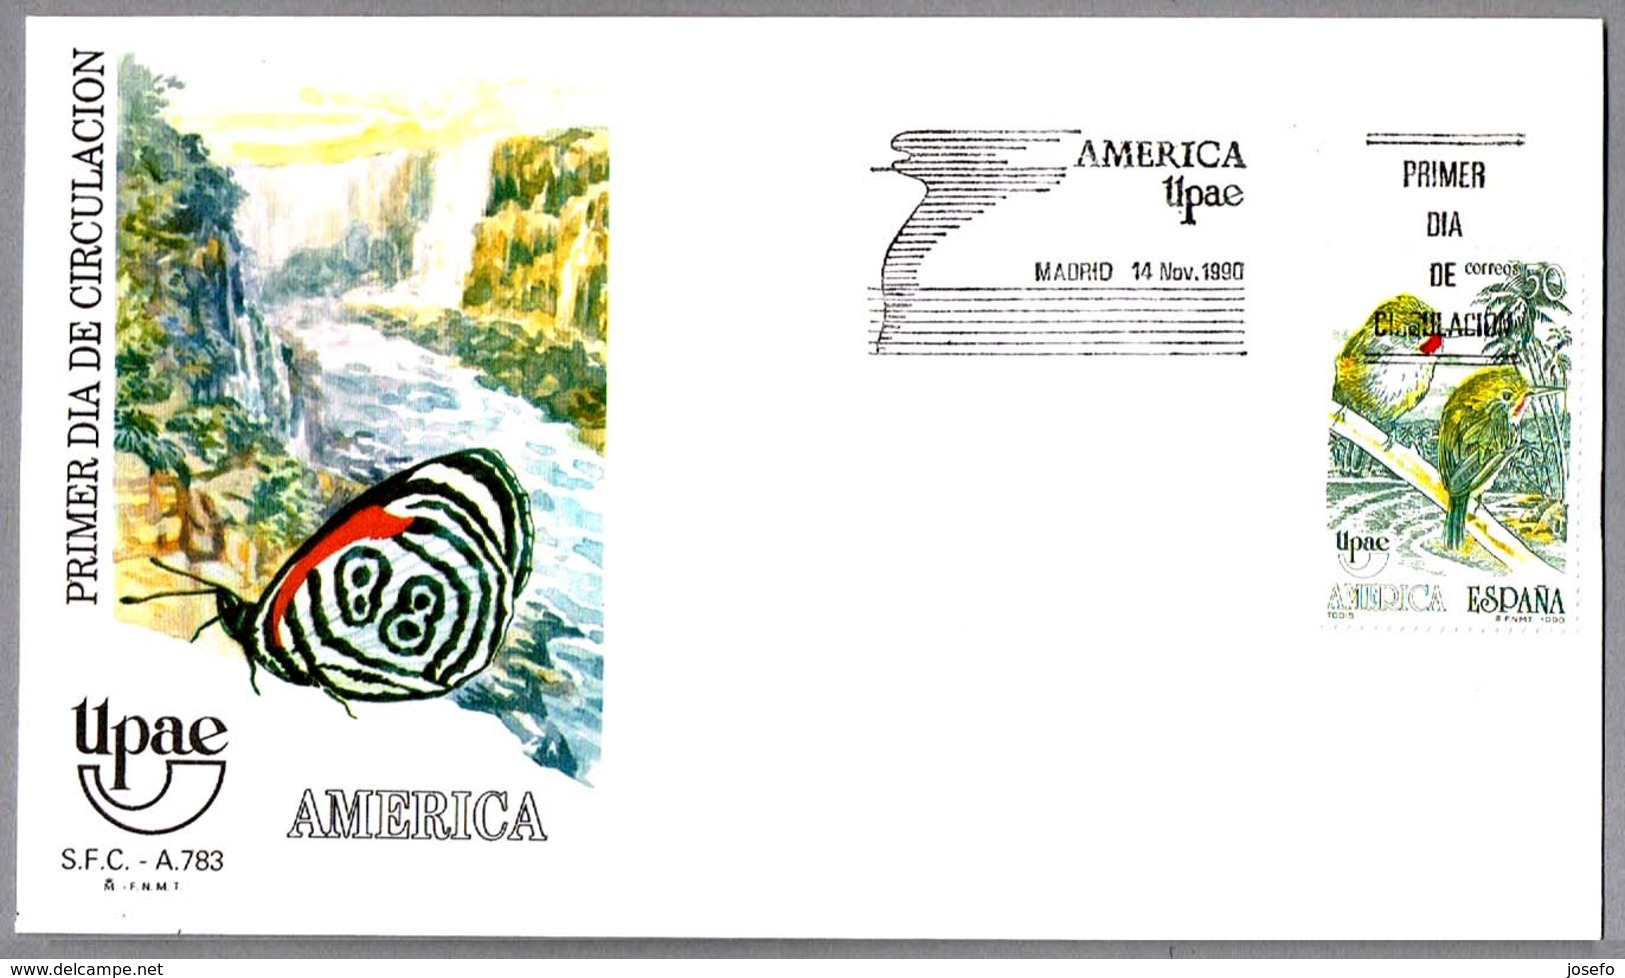 America UPAE - AVE TODIS - TODUS. FDC Madrid 1990 - Werbestempel